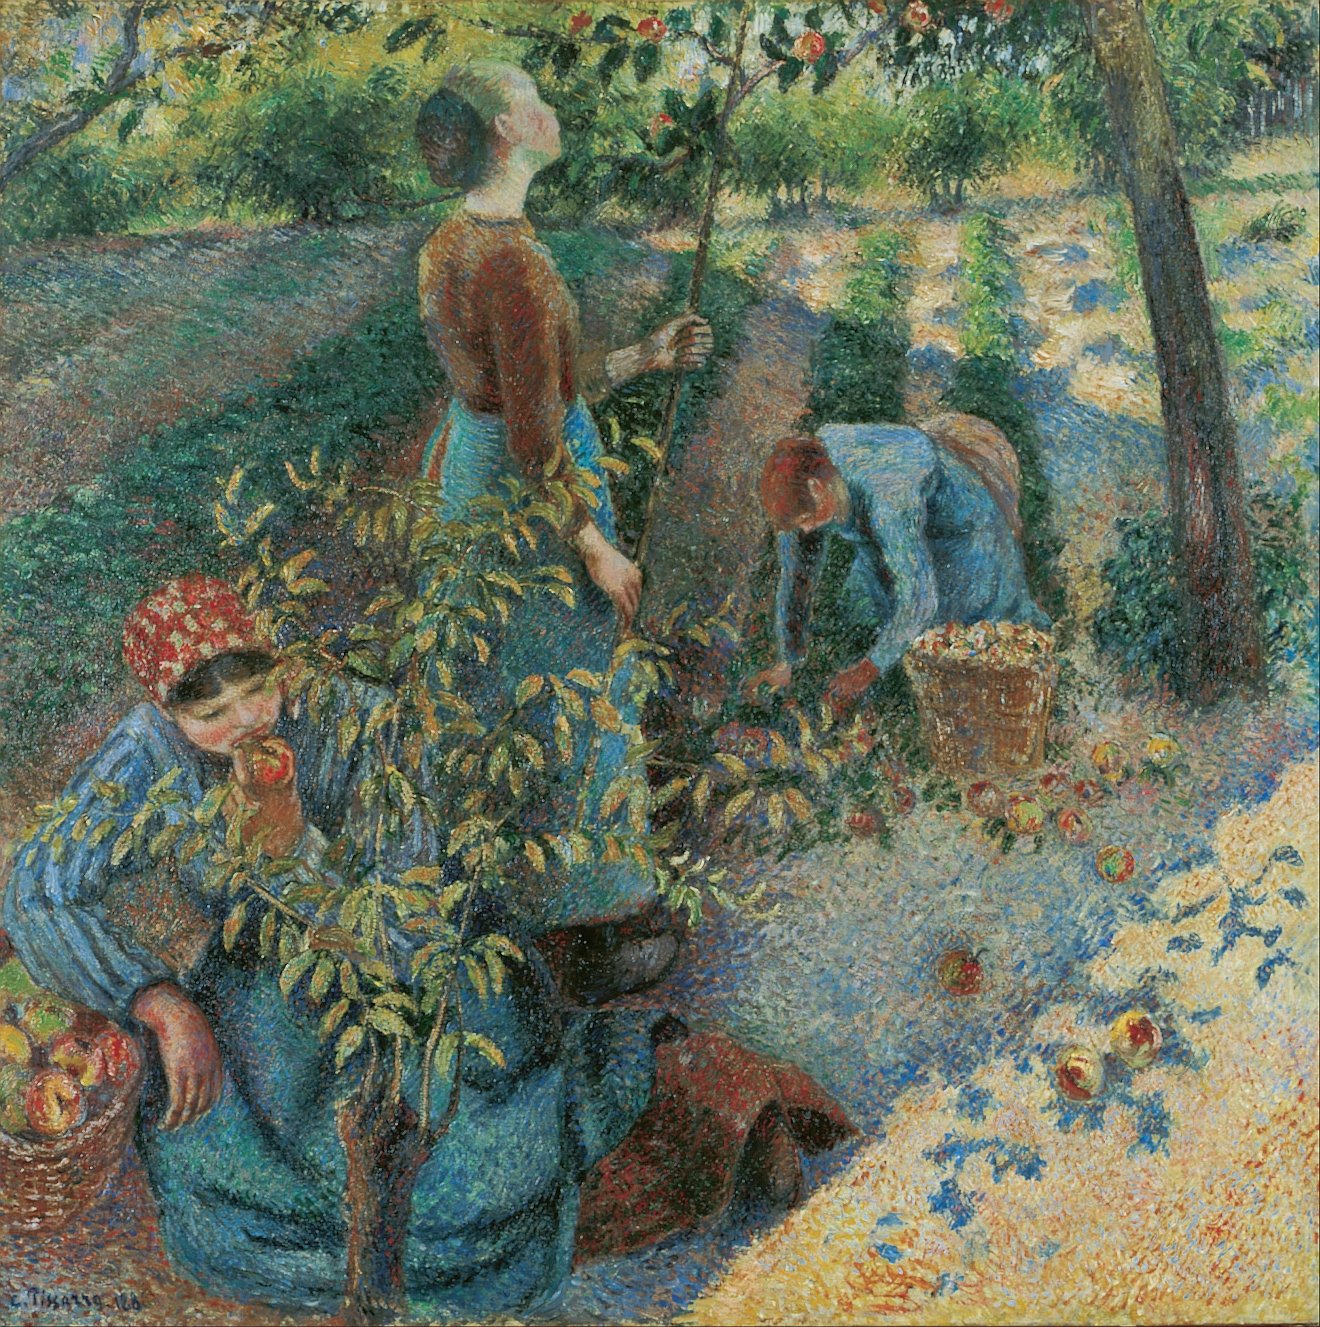 Camille+Pissarro-1830-1903 (224).jpg